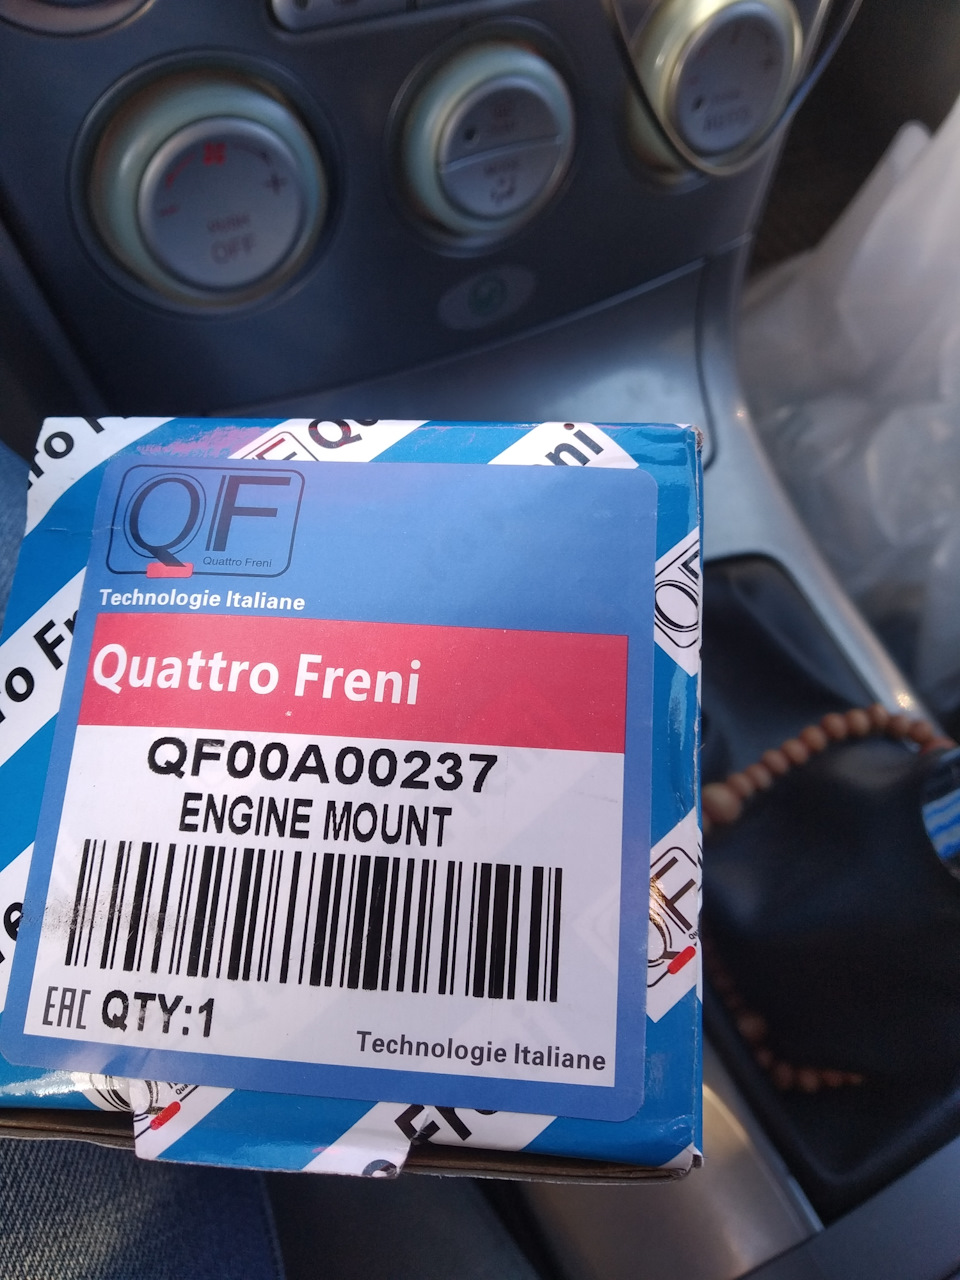 Freni страна производитель. Quattro freni масляный. Quattro freni каталог. Quattro freni детали упаковка. Quattro freni Страна производитель.